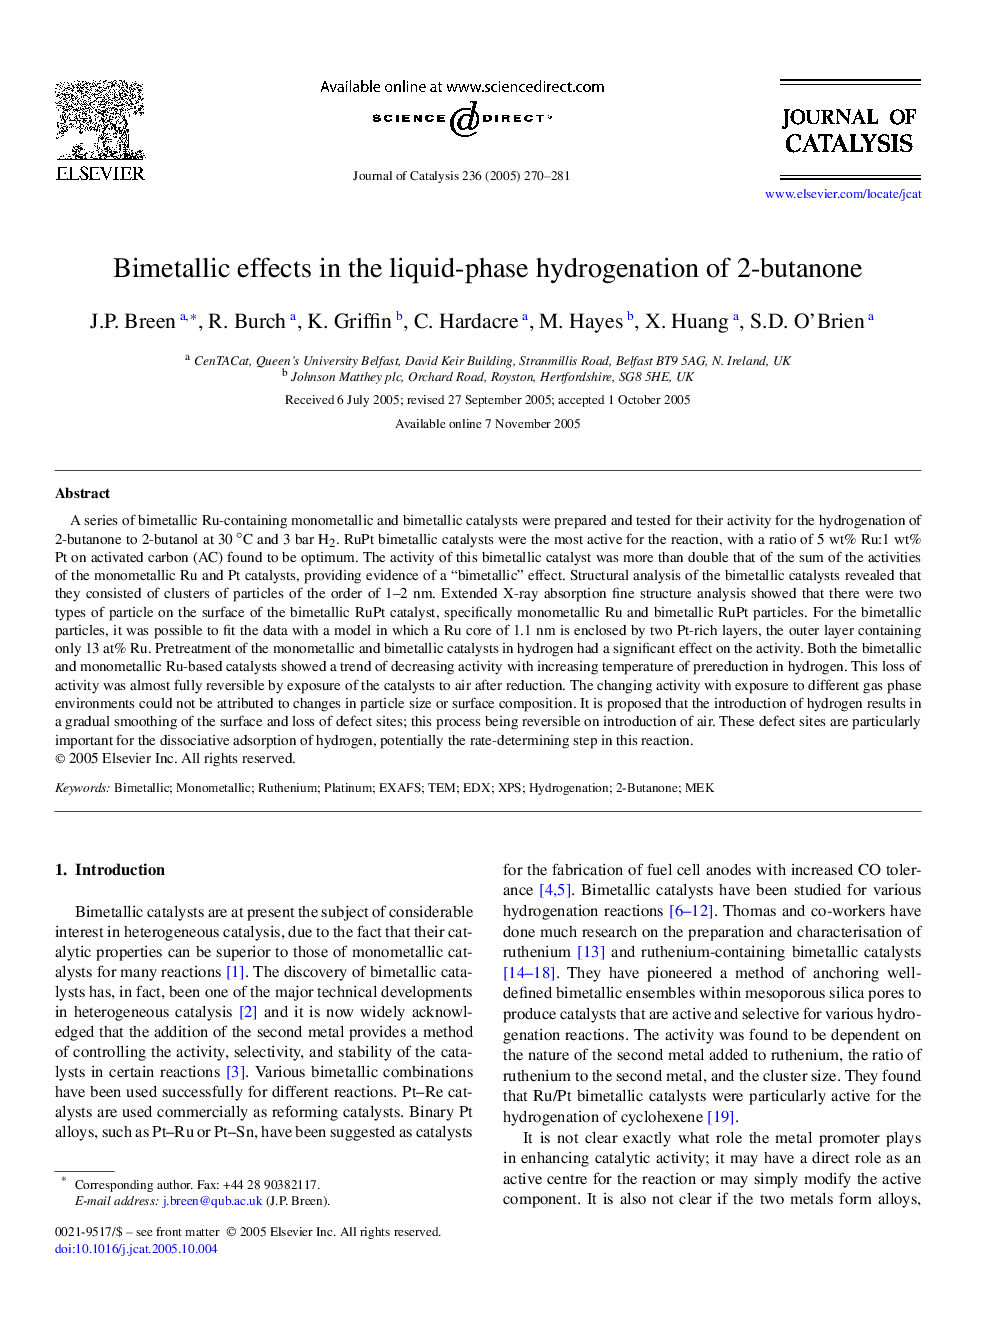 Bimetallic effects in the liquid-phase hydrogenation of 2-butanone